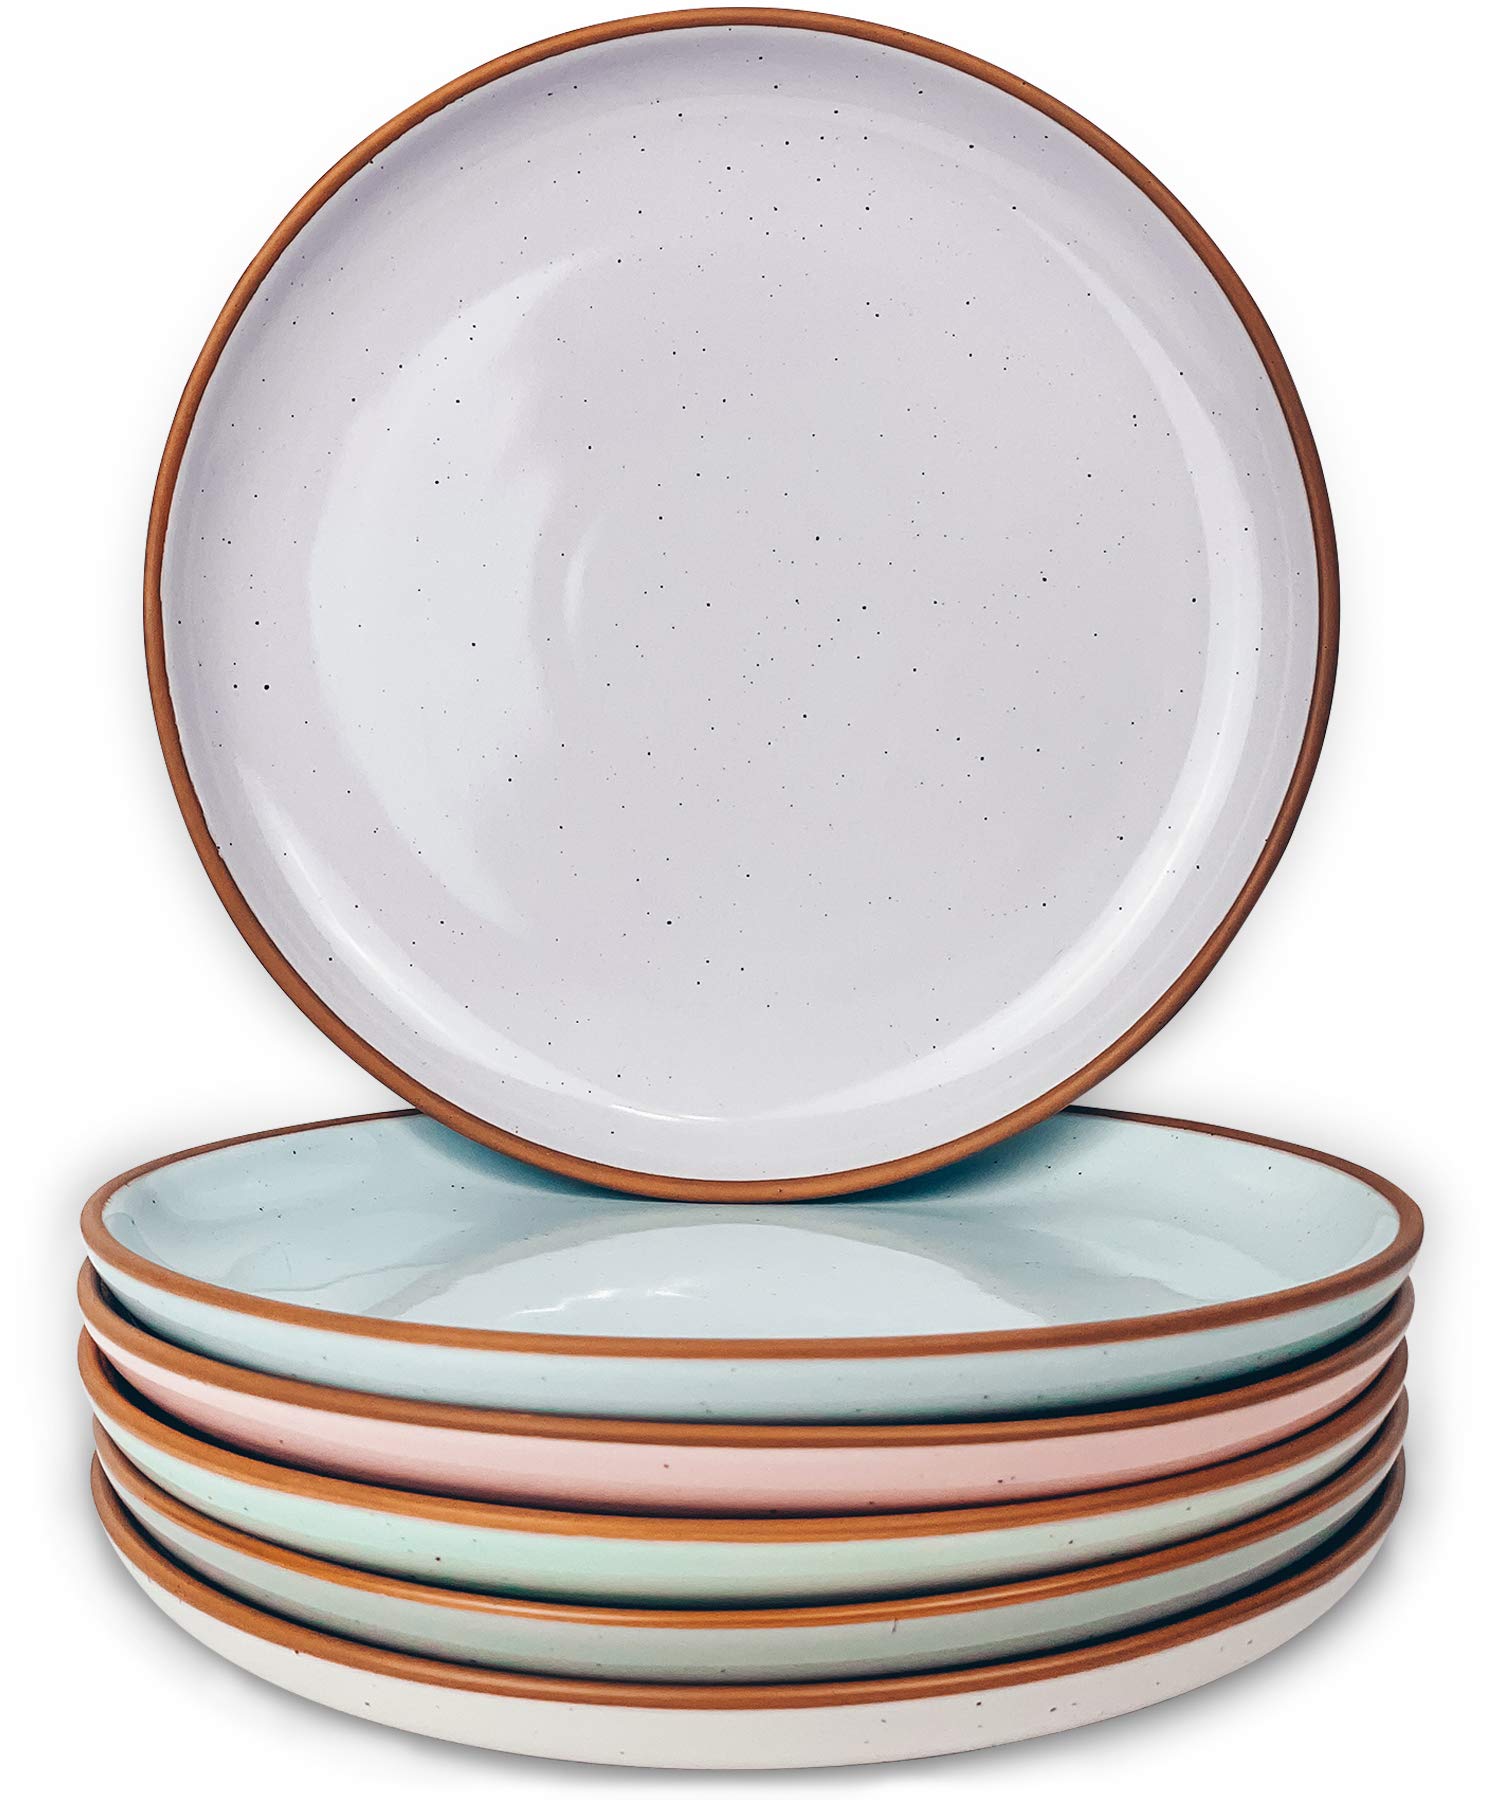 Mora Ceramic Plates Set, 7.8 in - Set of 6 - The Dessert, Salad, Appetizer, Small Dinner etc Plate. Microwave, Oven, and Dishwasher Safe, Scratch R...